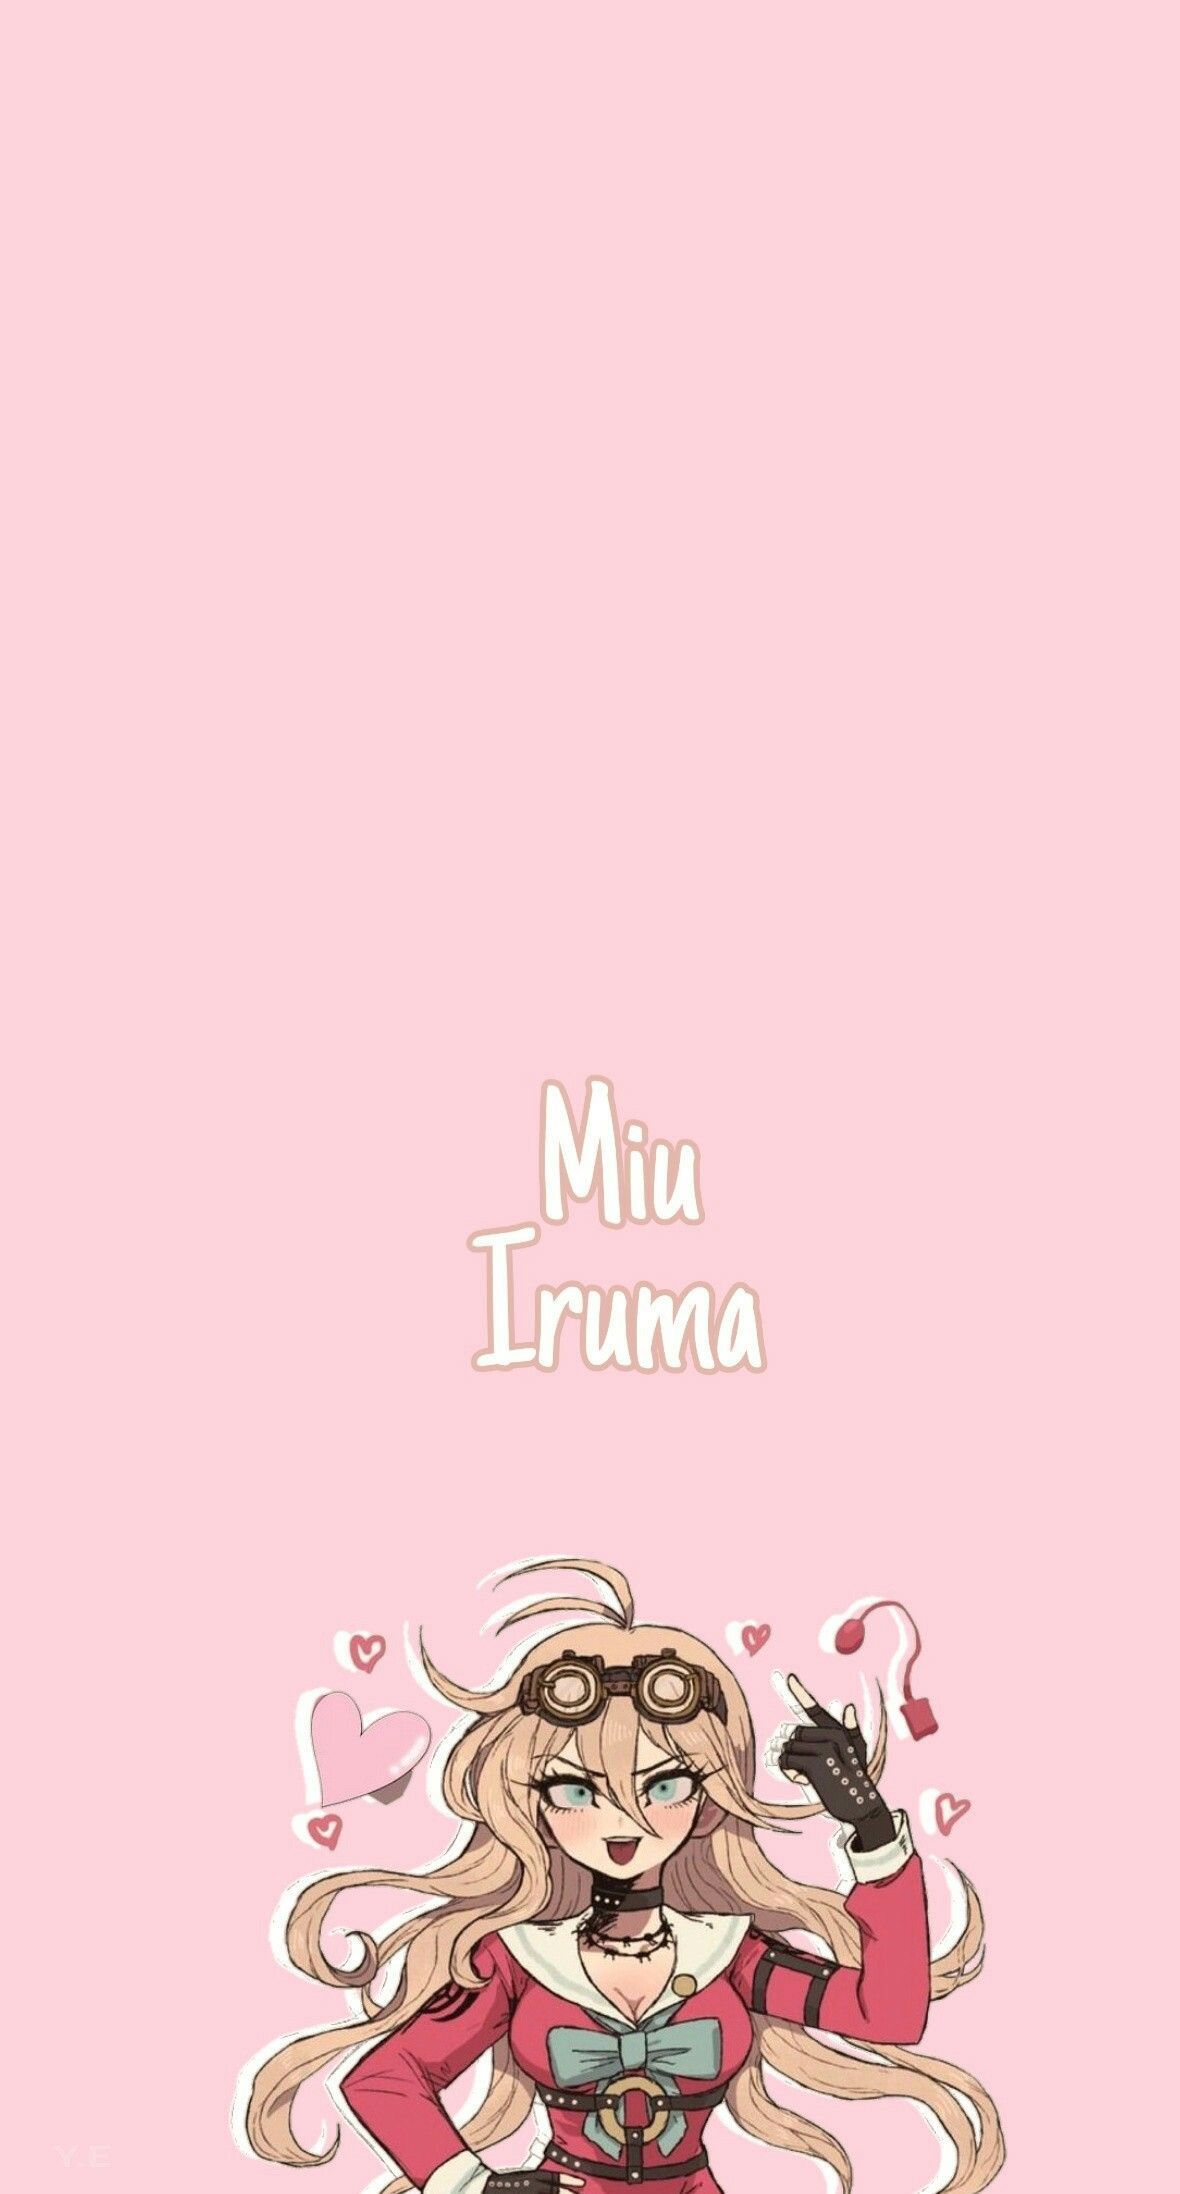 Miu Iruma wallpaper. Anime wallpaper, Aesthetic anime, Iruma